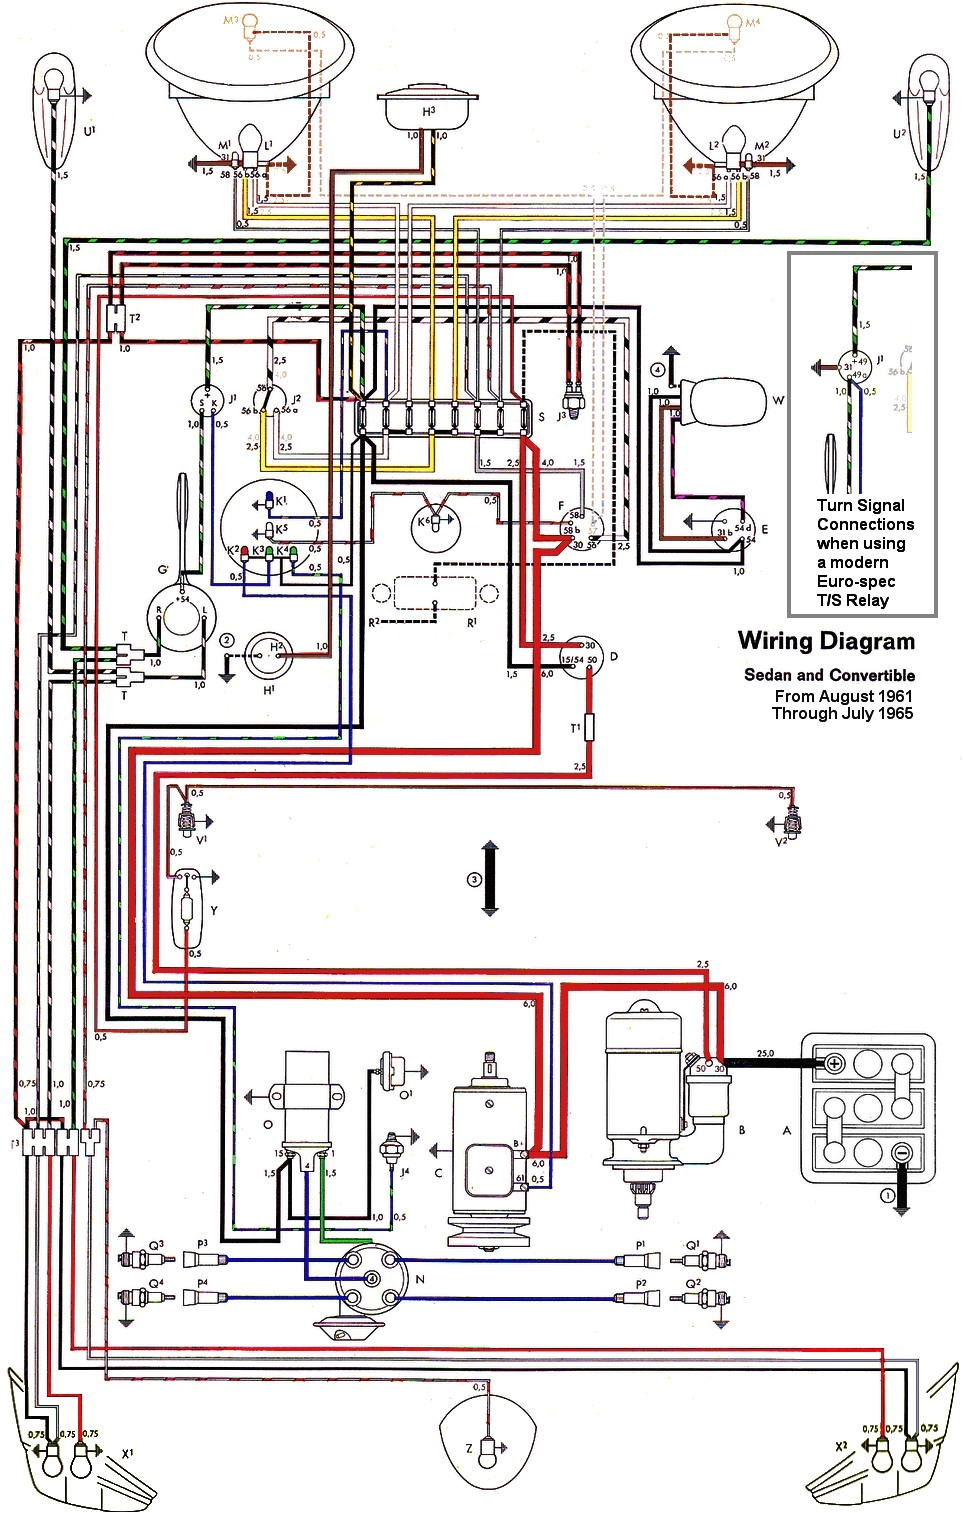 thesamba com type 1 wiring diagrams 1973 vw beetle headlight switch wiring diagram 1973 beetle wiring diagram